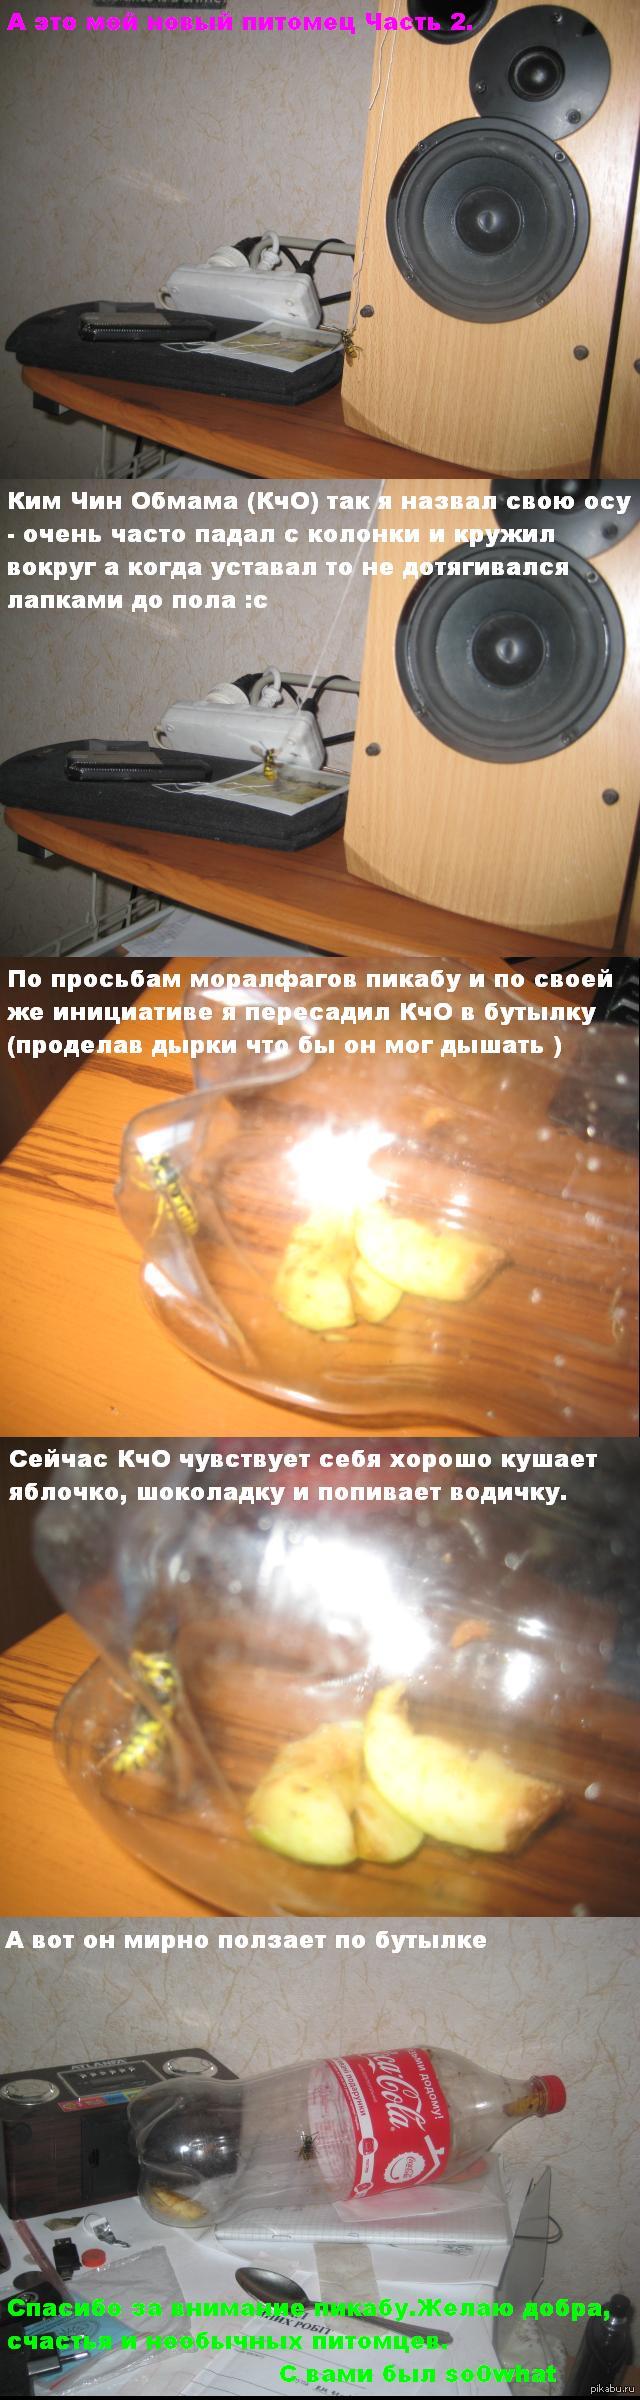      2. http://pikabu.ru/story/a_yeto_moy_novyiy_pitomets_1216822    1  .